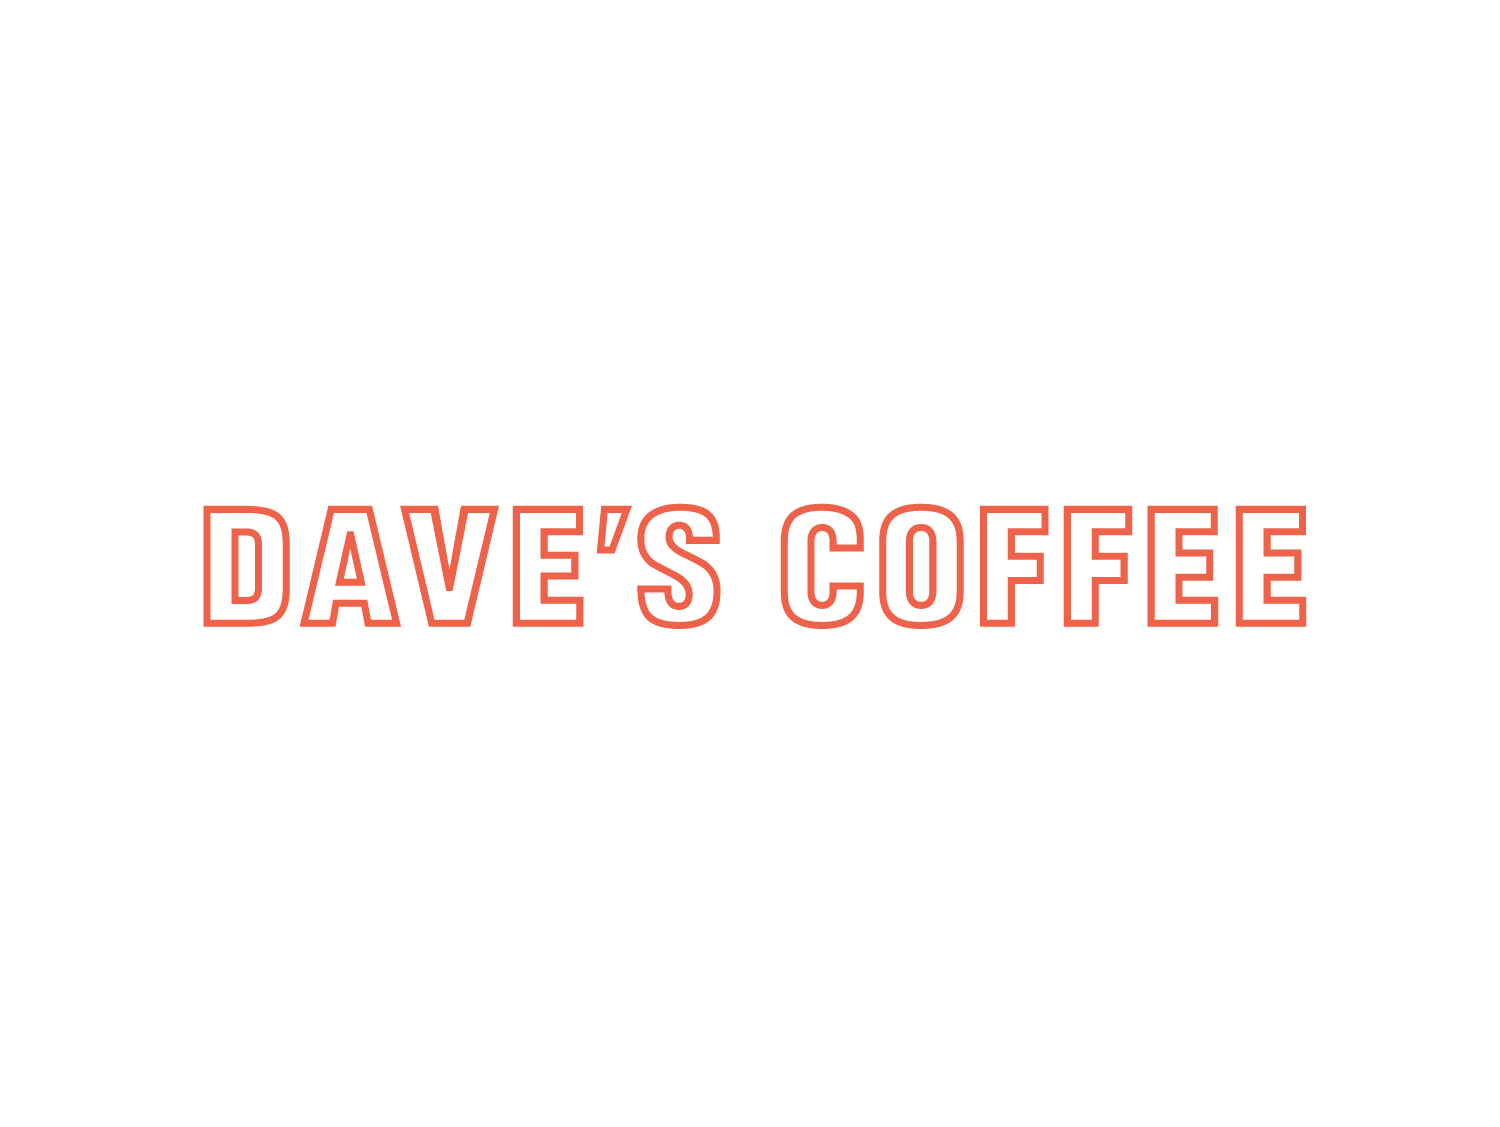 Daves-Coffee-logo-02.jpg